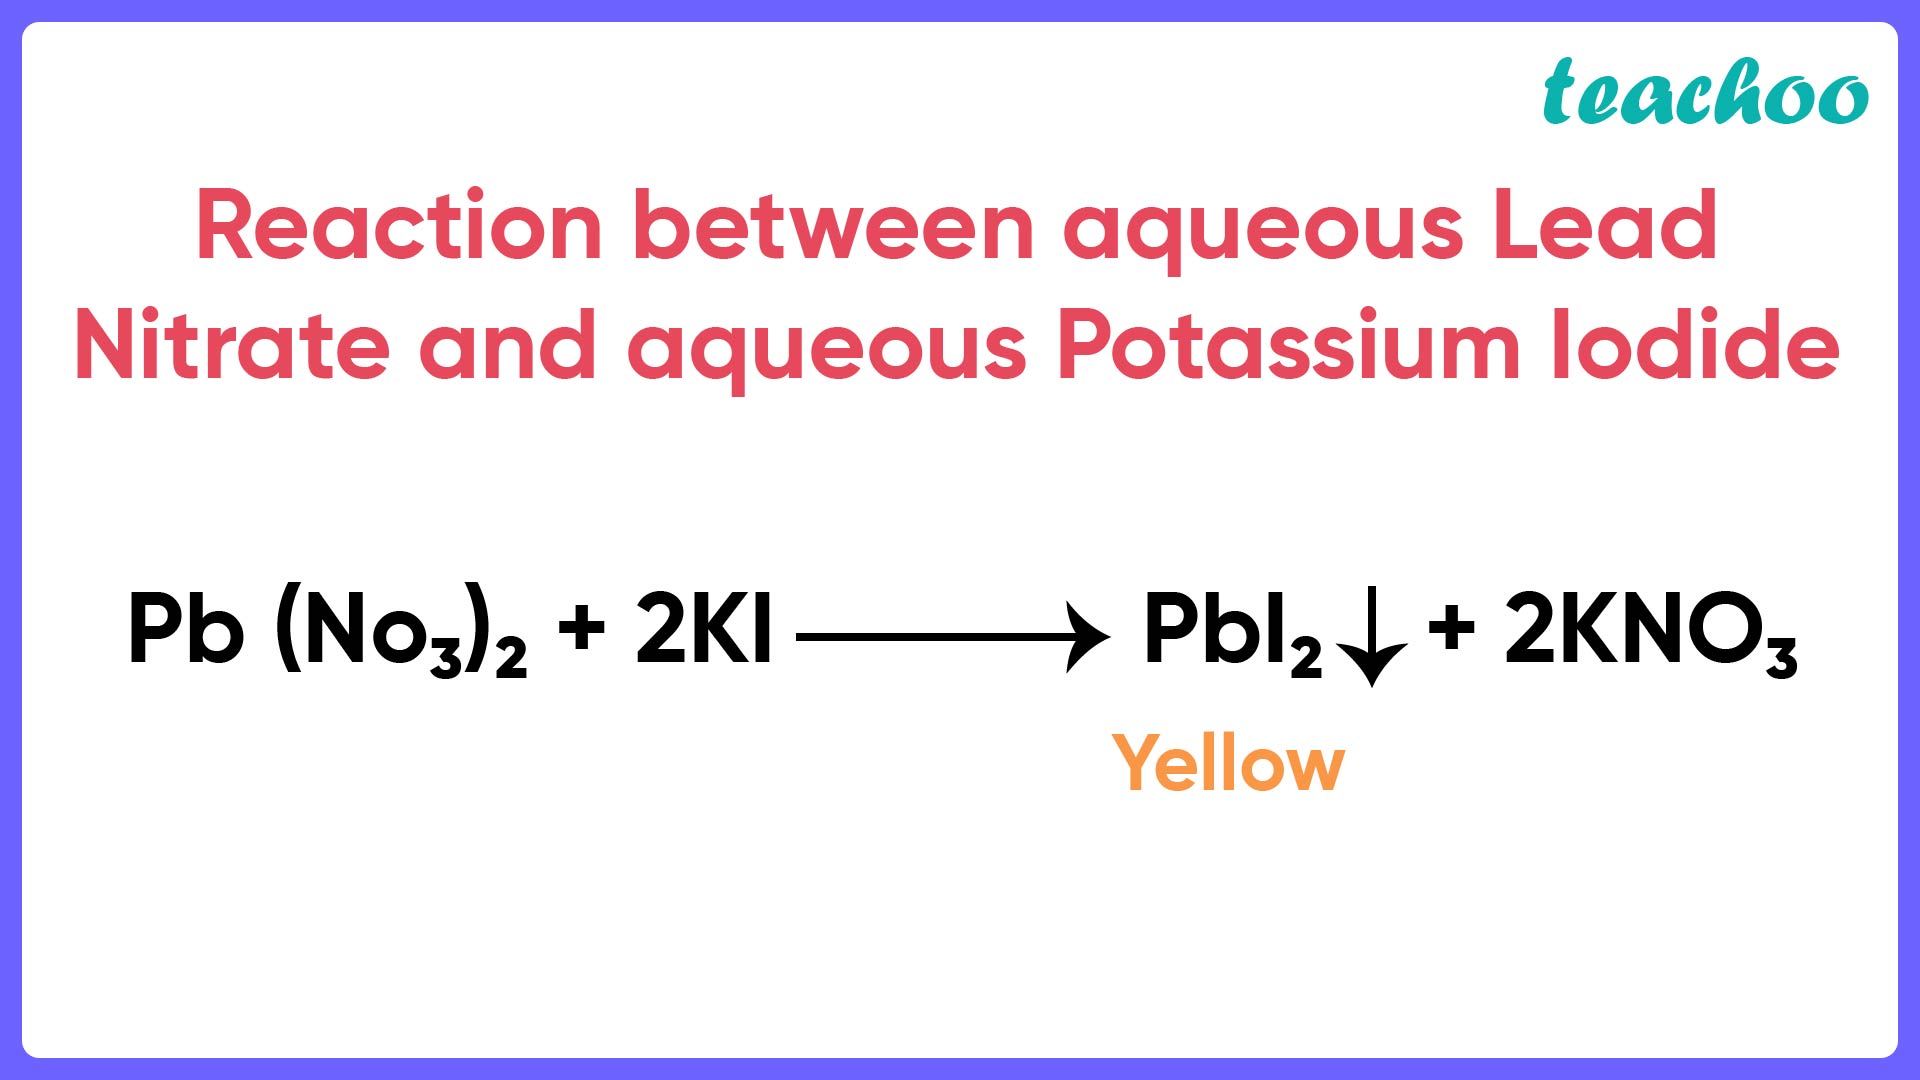 Reaction between aqueous Lead Nitrate and aqueous Potassium Iodide - Teachoo.jpg